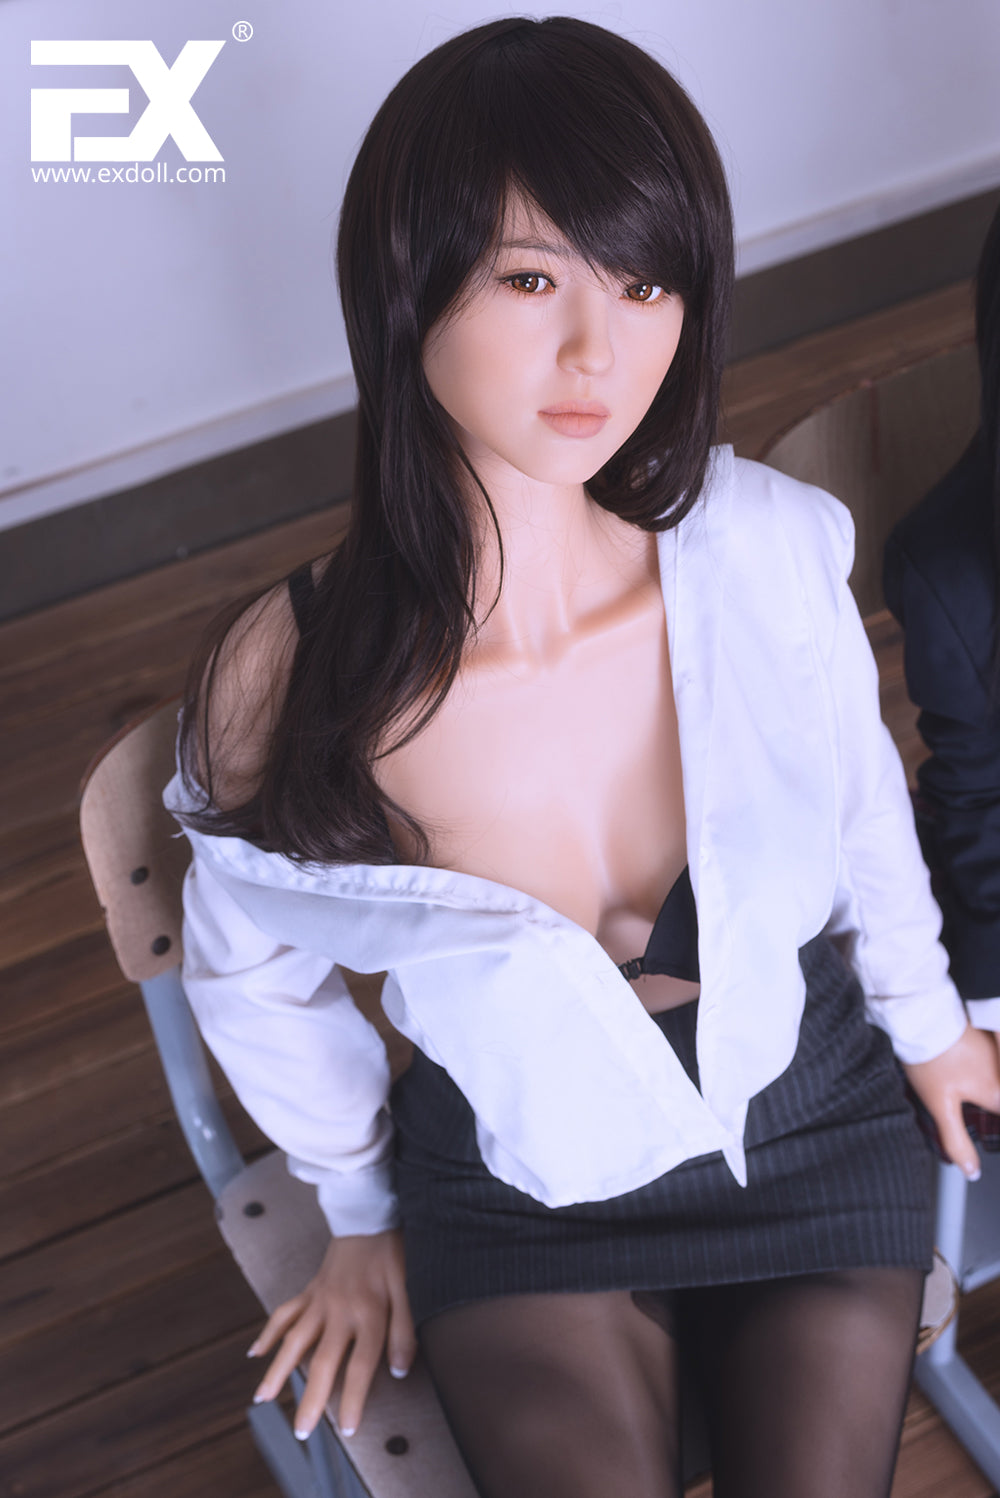 EX Doll Ukiyoe Series 170 cm Silicone - Mo Han | Sex Dolls SG